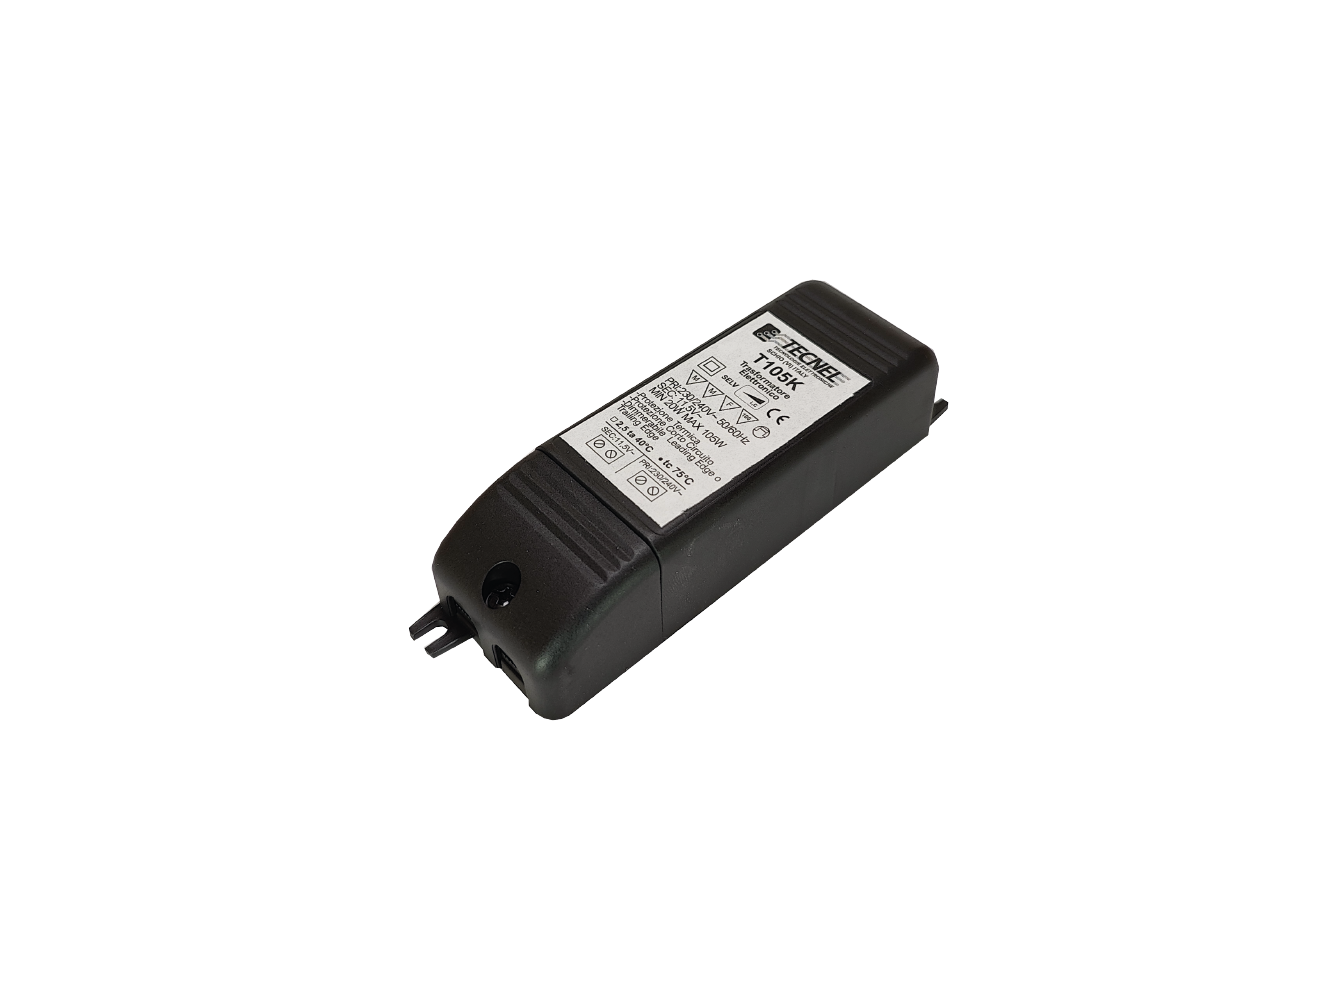 Trasformatore Elettronico dimmerabile Lampade Alogene BT 35-105W IP20 VDE